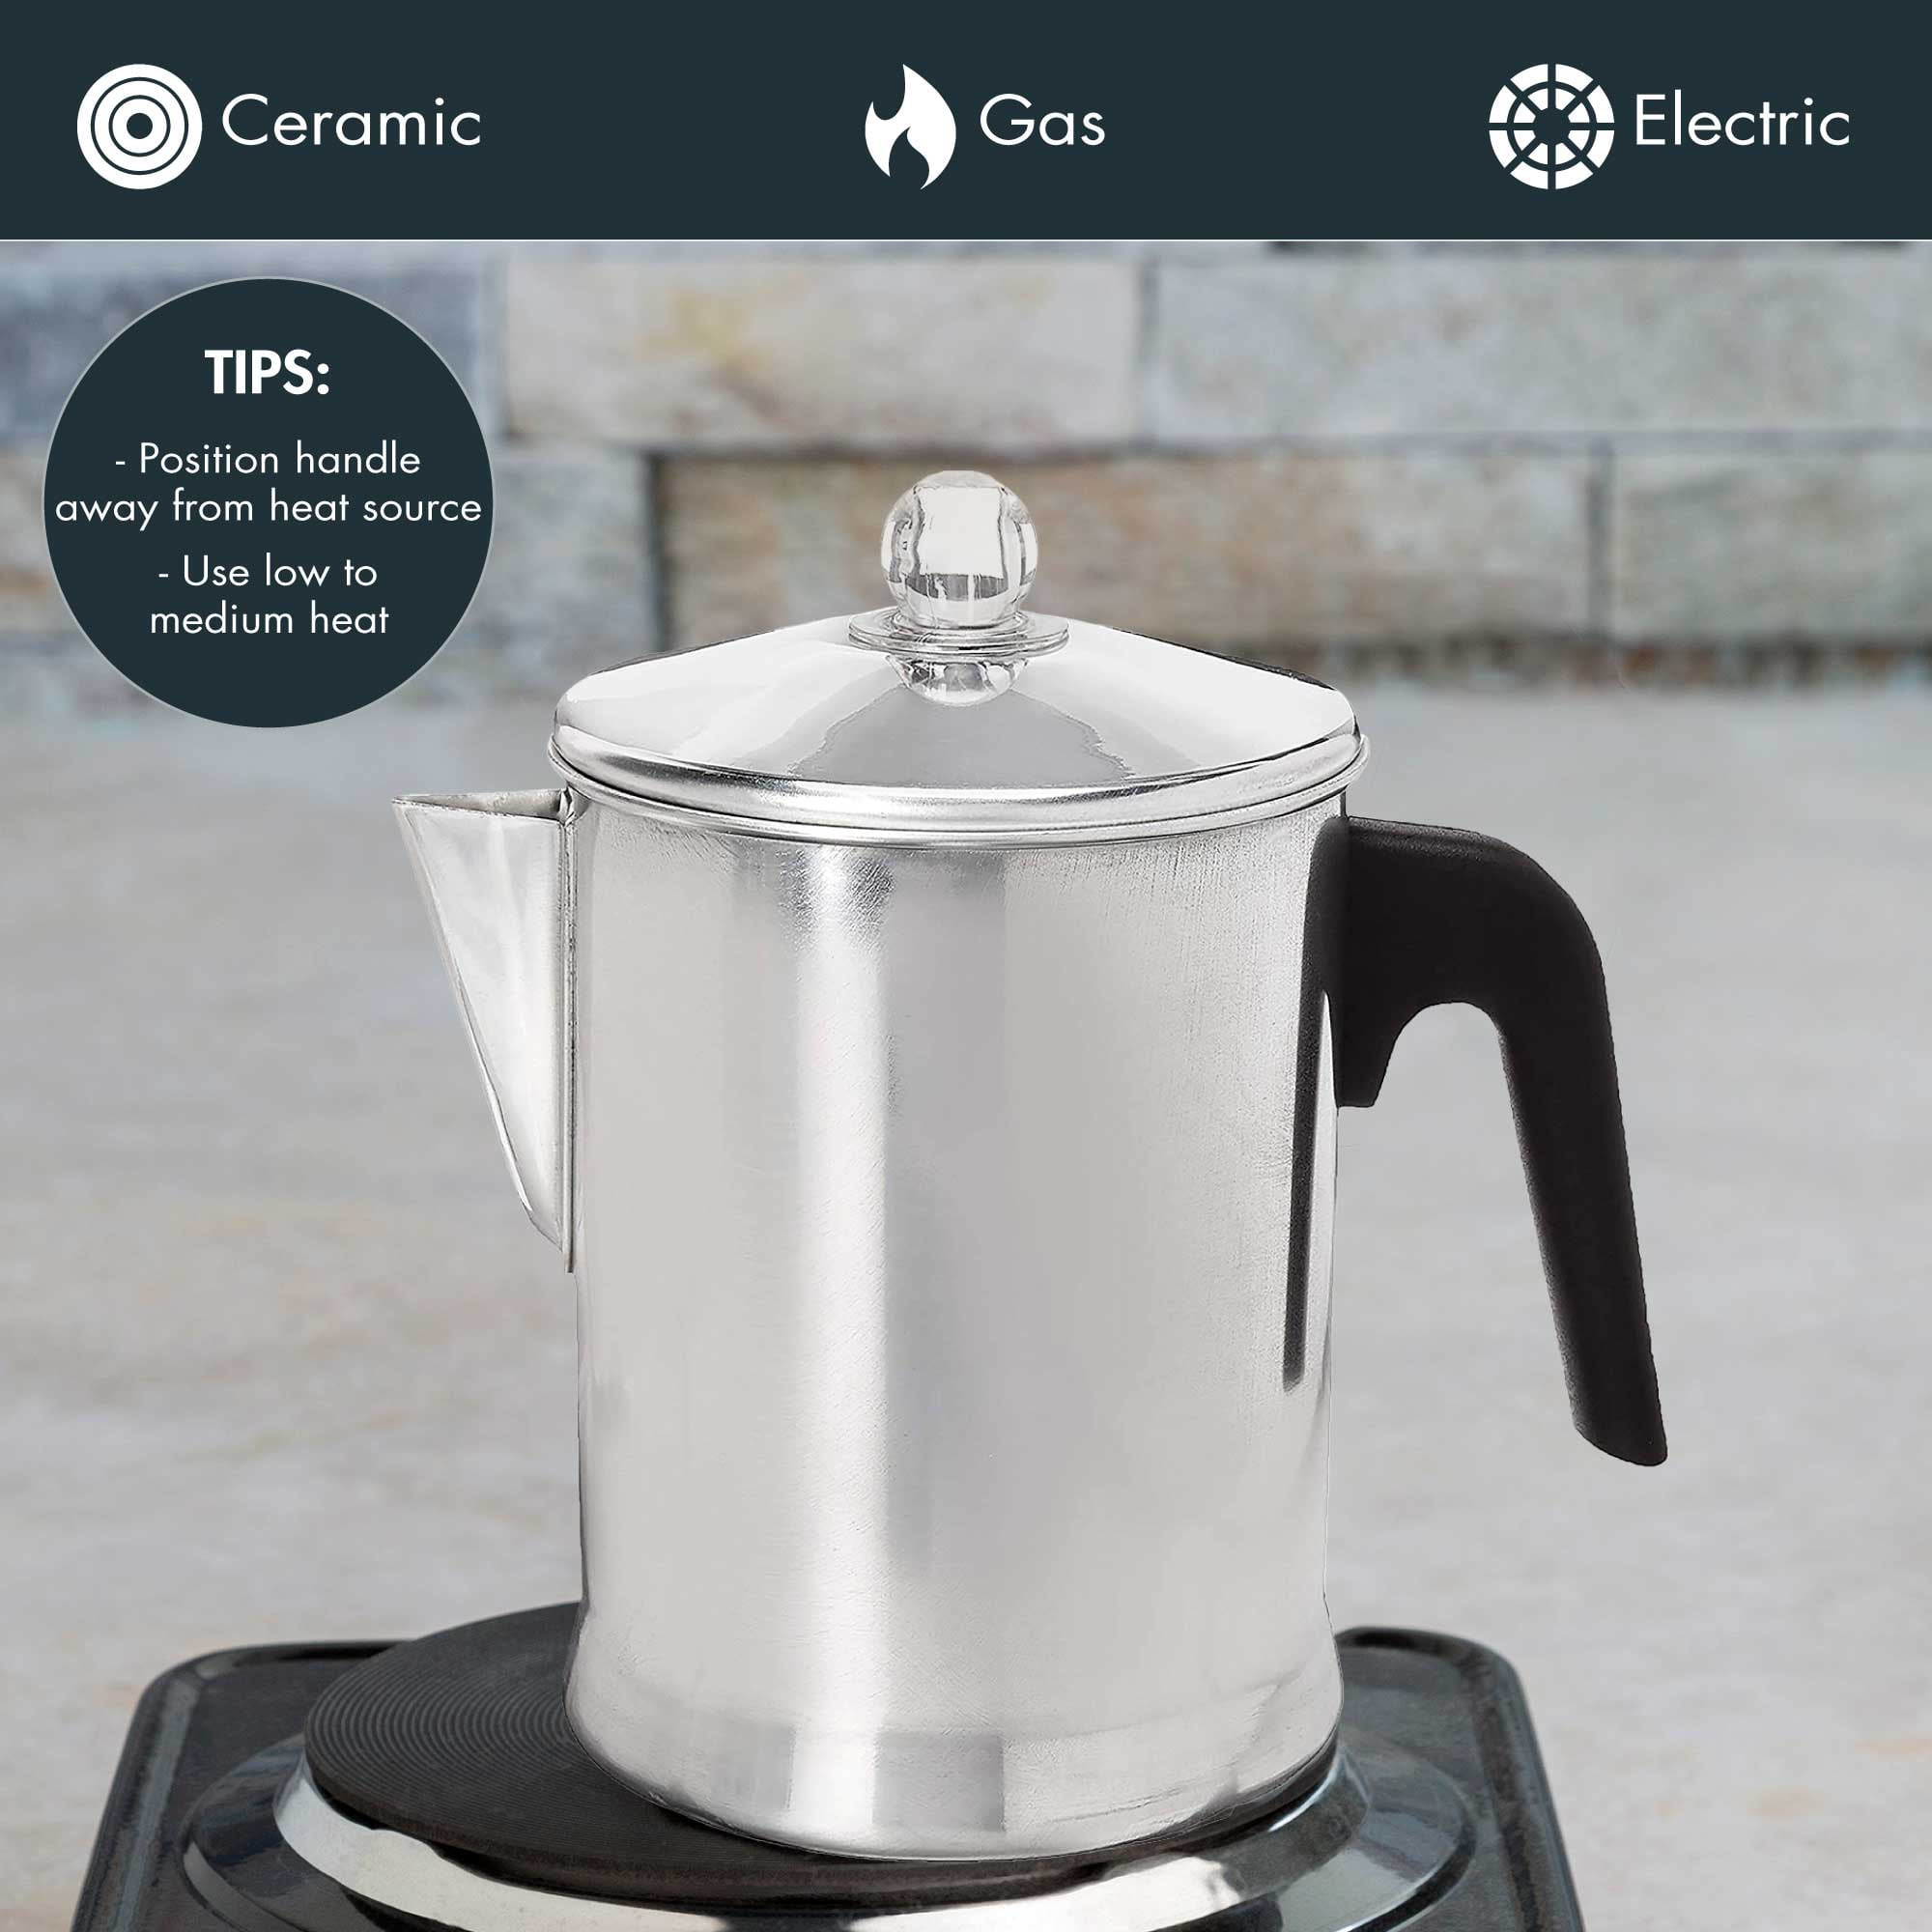 DORMEYER Electric Percolator Coffee Maker Pot Automatic 10 cup Model 6901  VTG